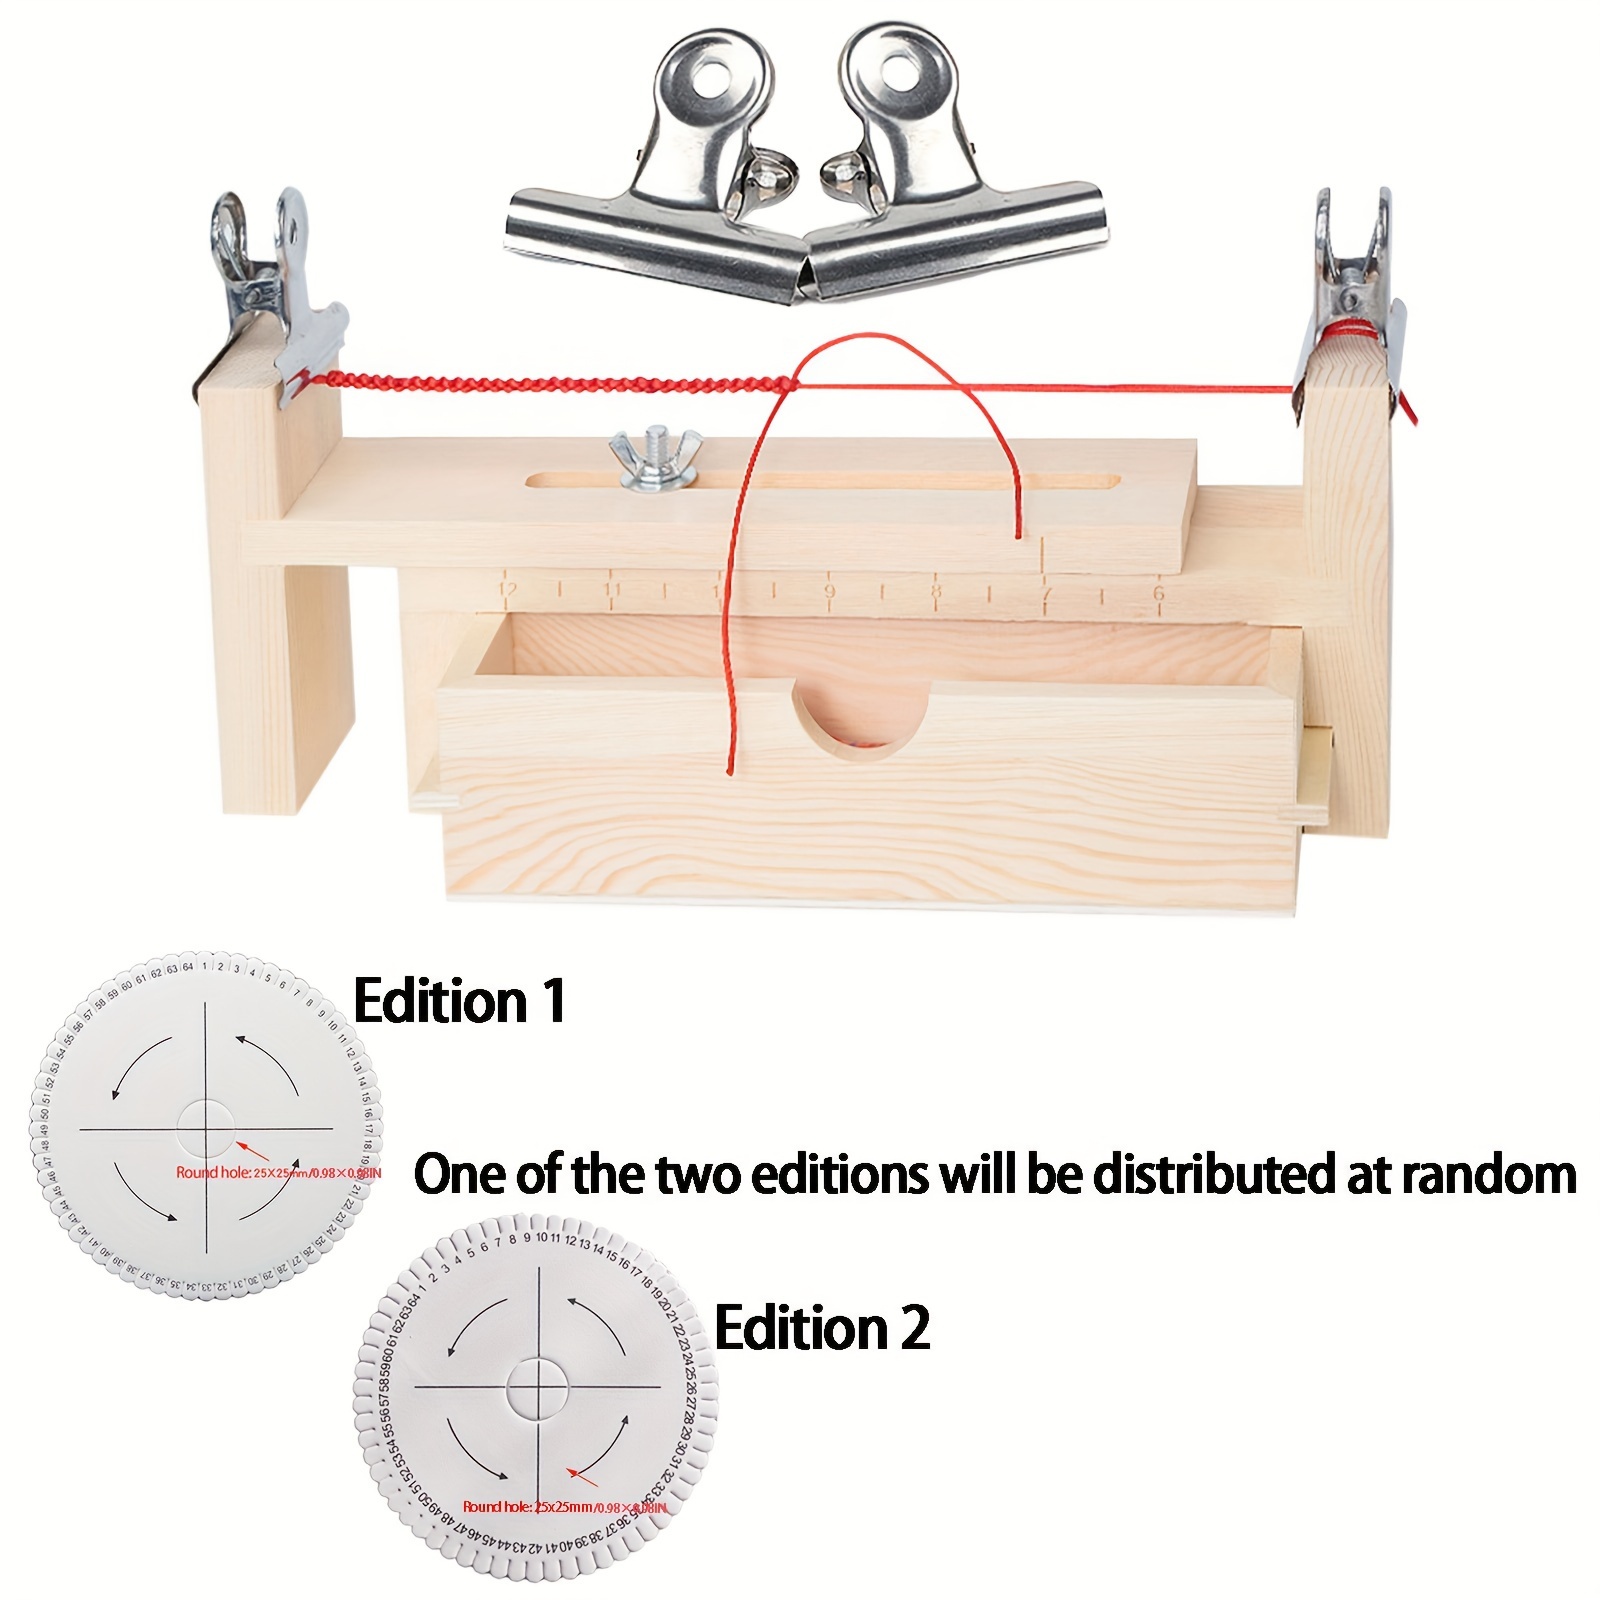 1pc Paracord Jig Bracelet Maker Wood U-shape Bracelet Scale With 2 Clamps  Diy Bracelet Braiding Tool